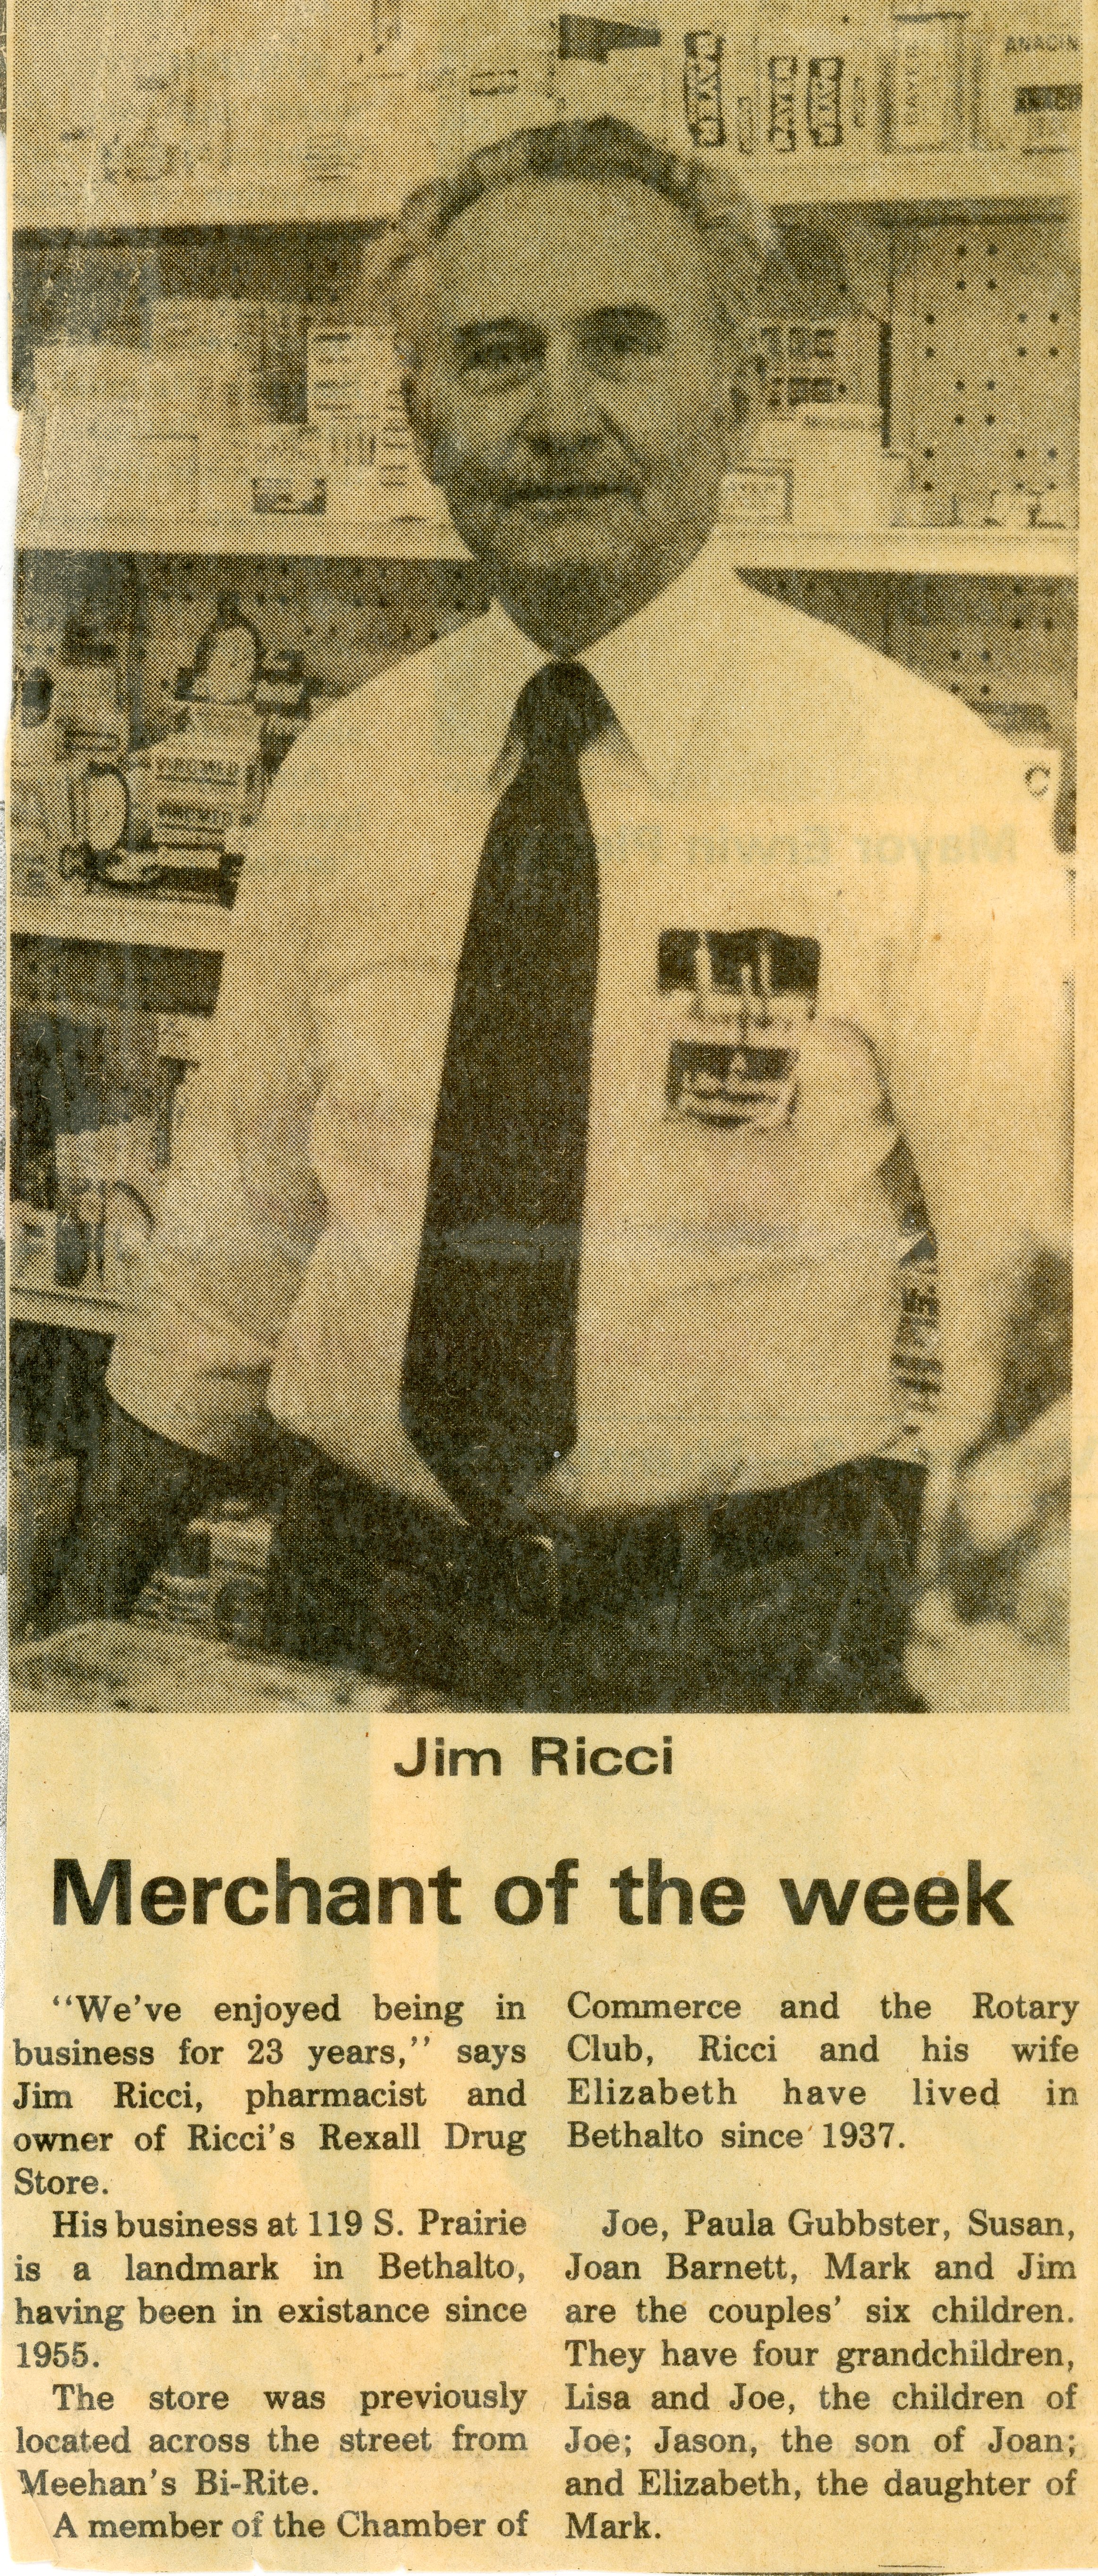 Jim Ricci after the war